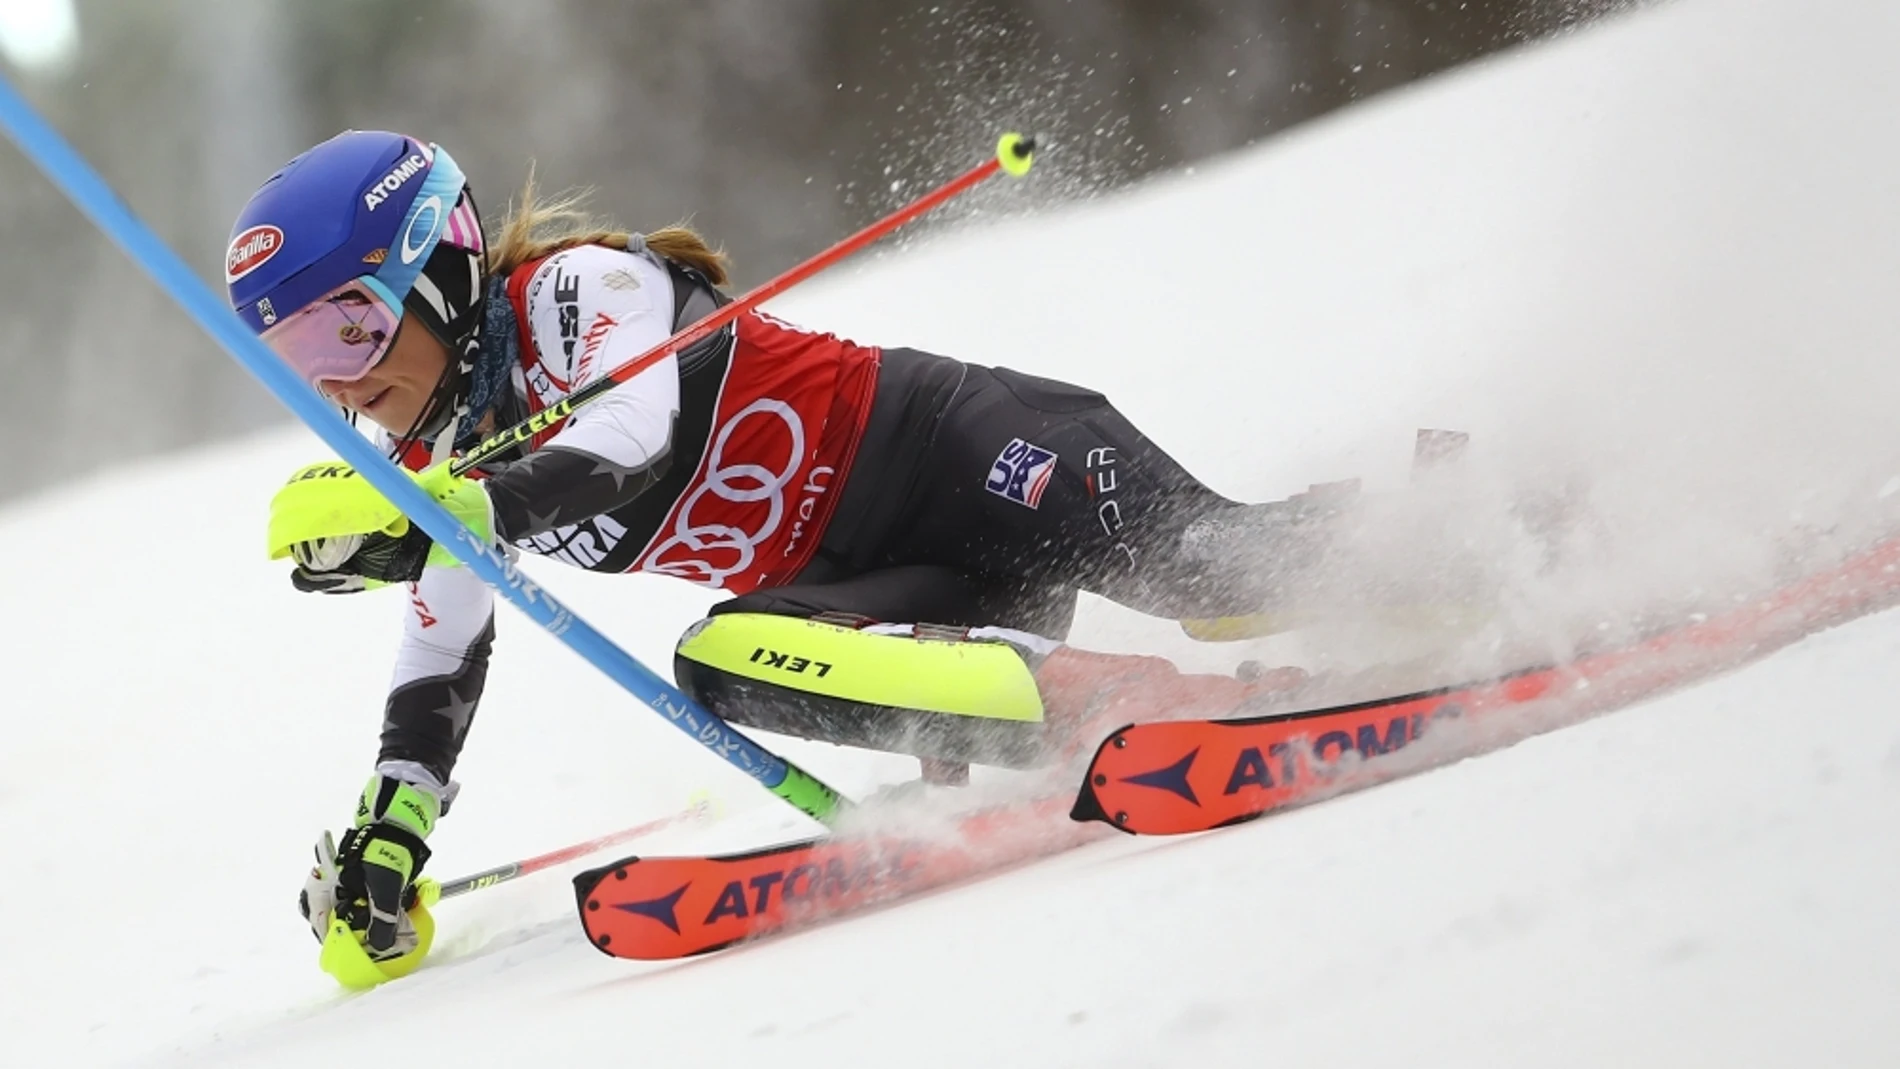 Espectacular imagen de Mikaela Shiffrin en la prueba de slalom celebrada en Zagreb